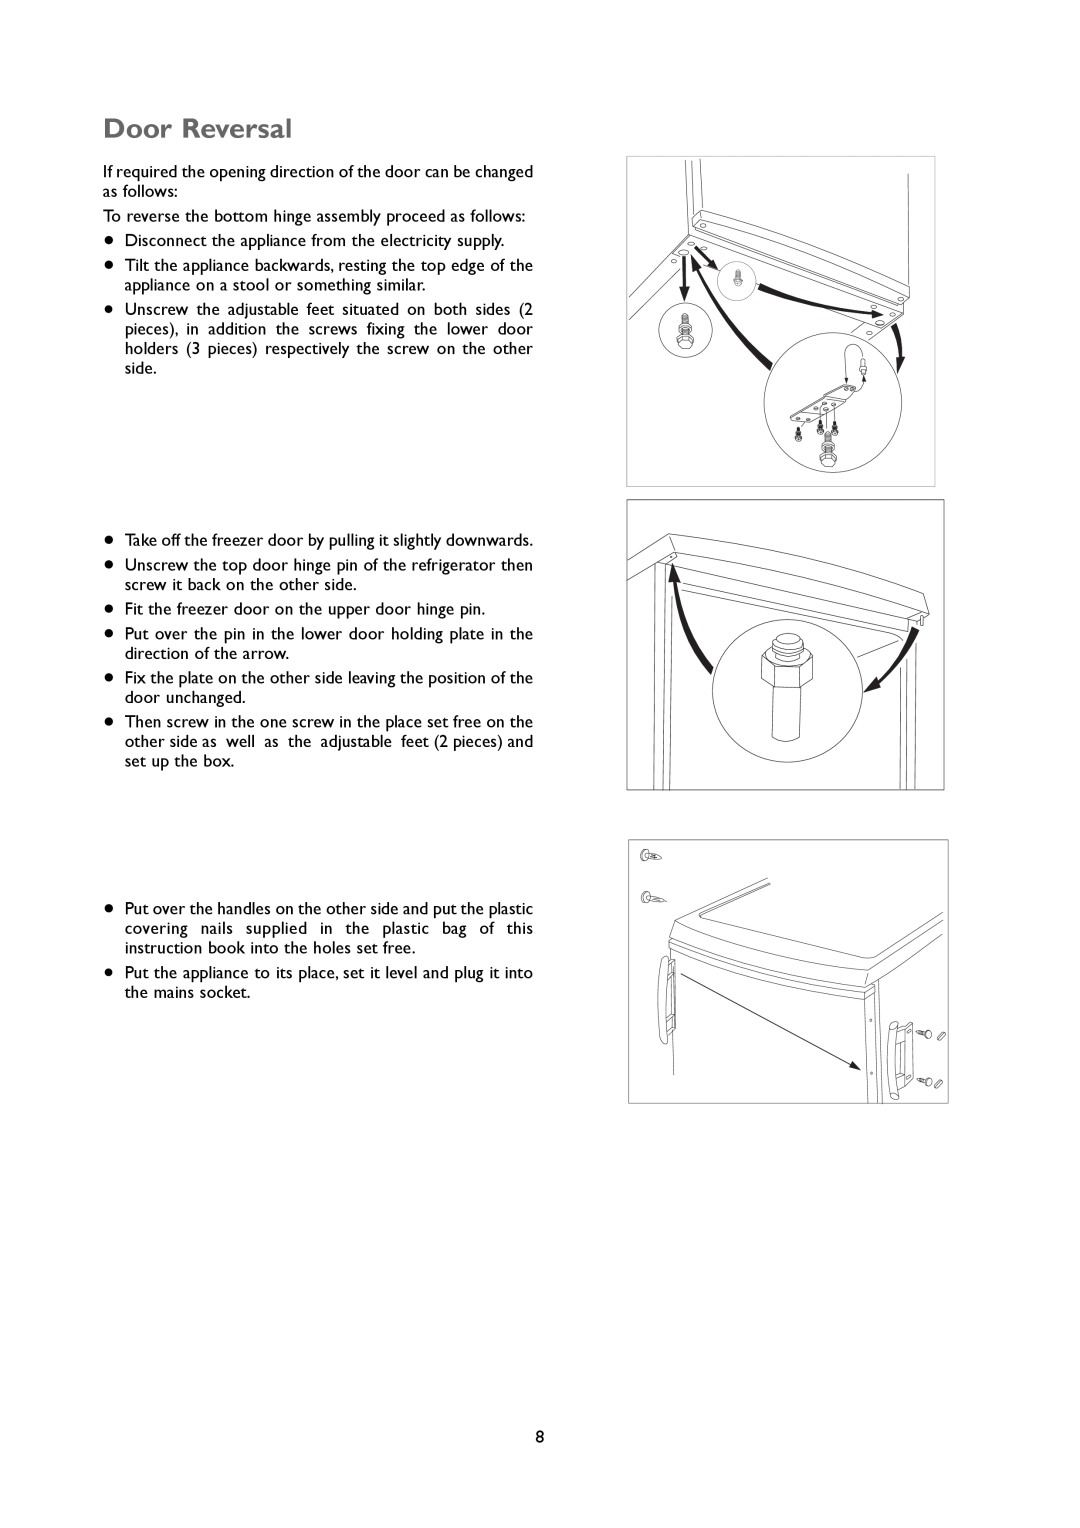 John Lewis JLUCLFW6003 instruction manual Door Reversal 